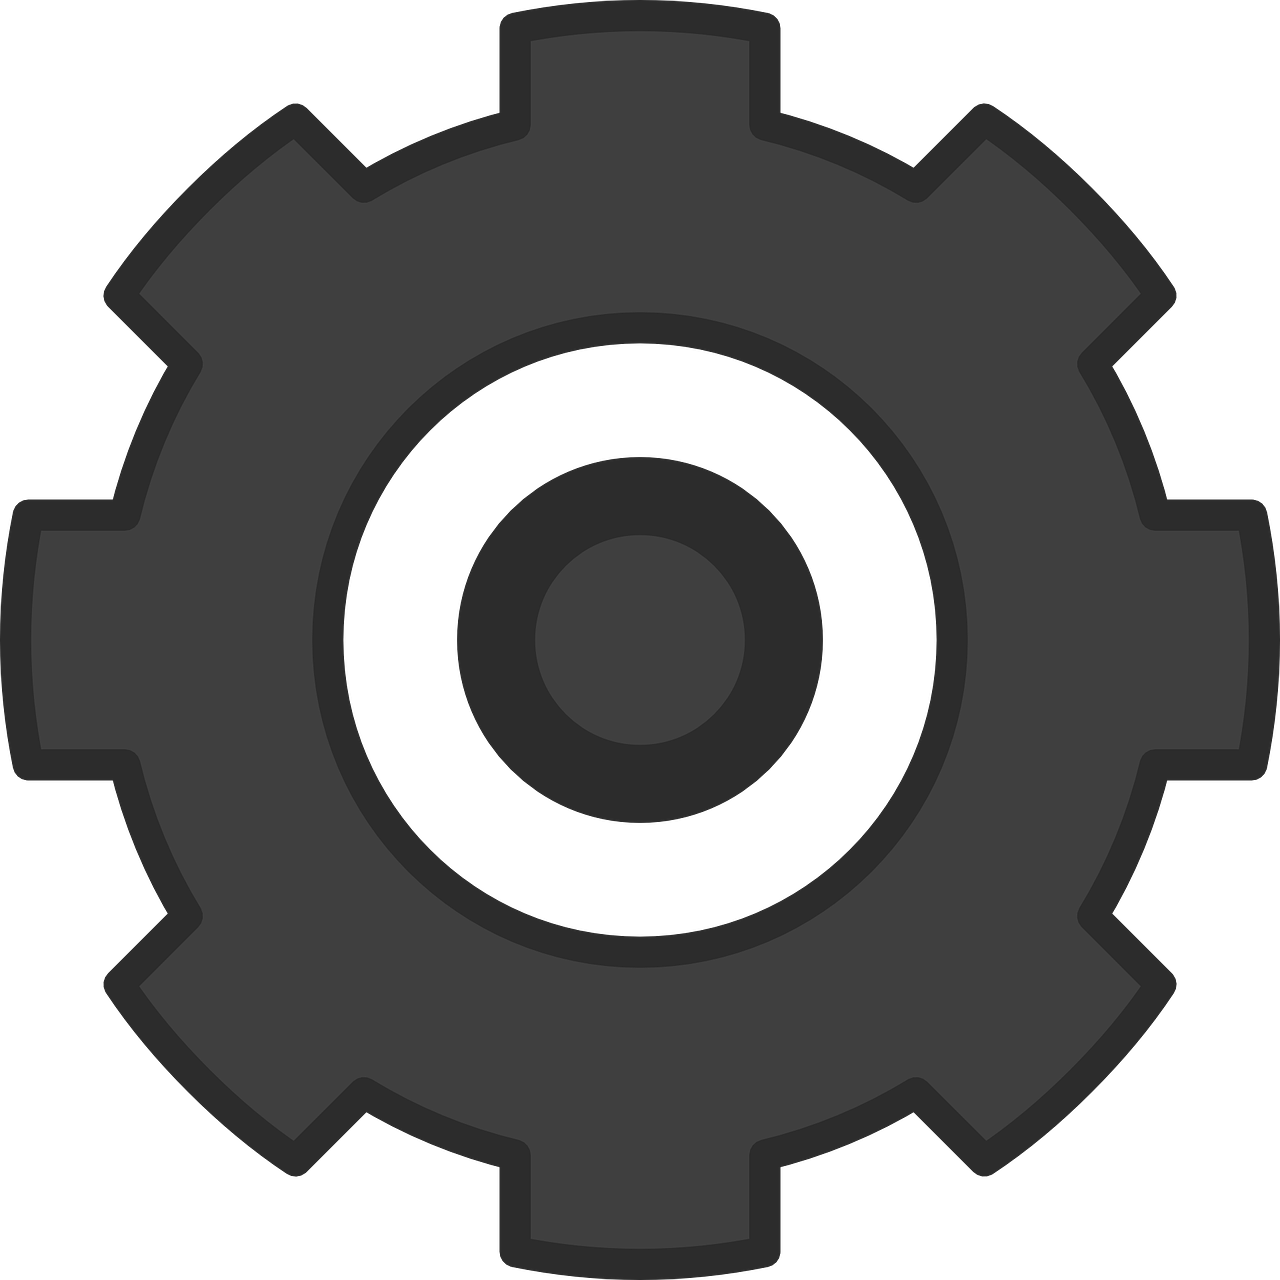 cog gear-wheel symbol free photo